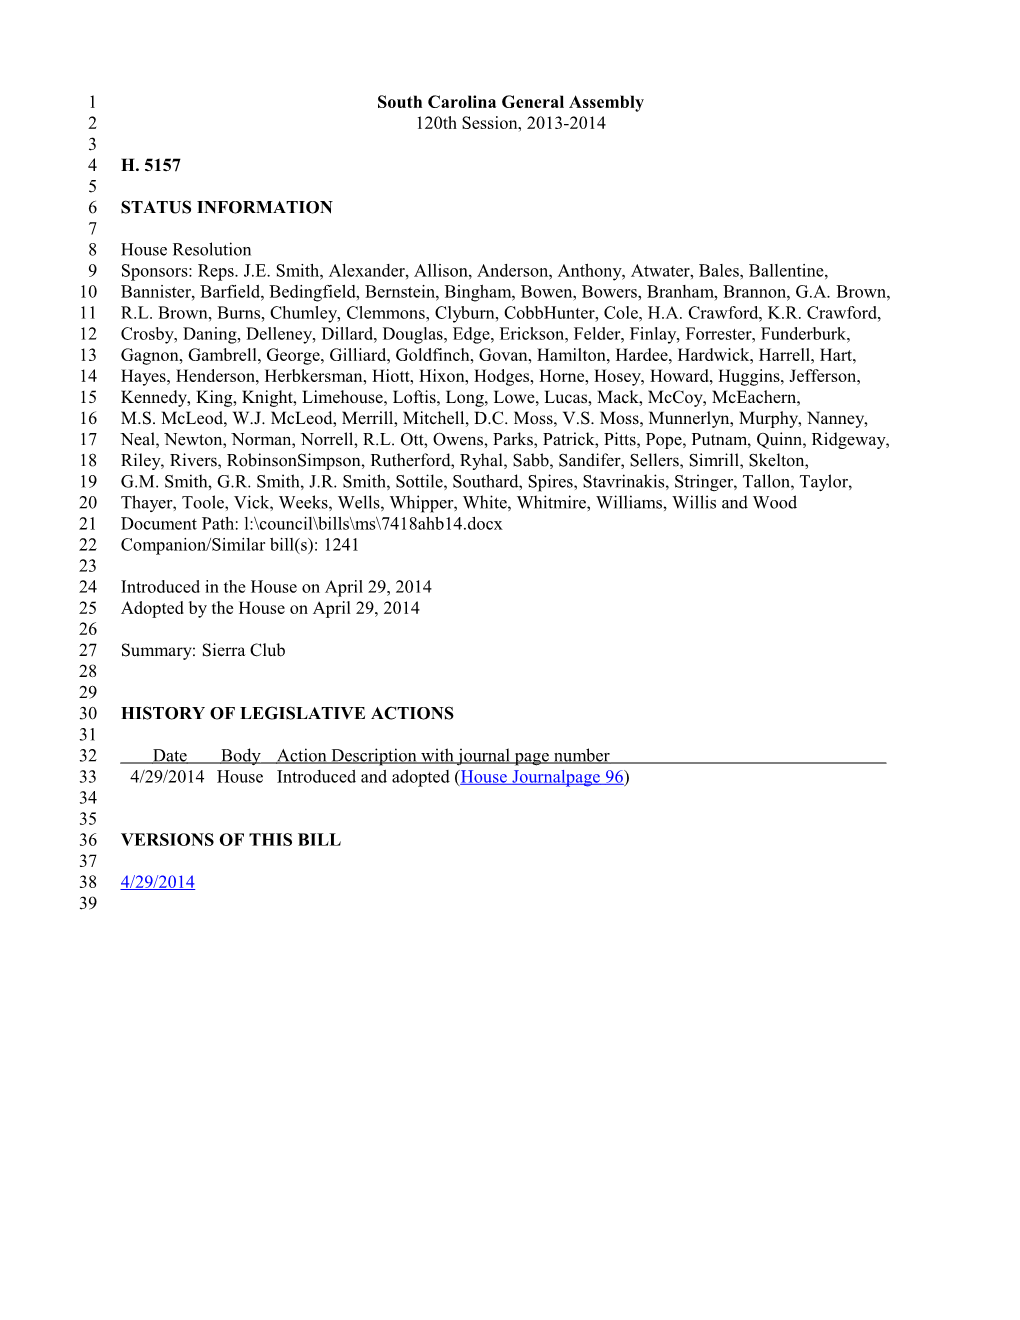 2013-2014 Bill 5157: Sierra Club - South Carolina Legislature Online